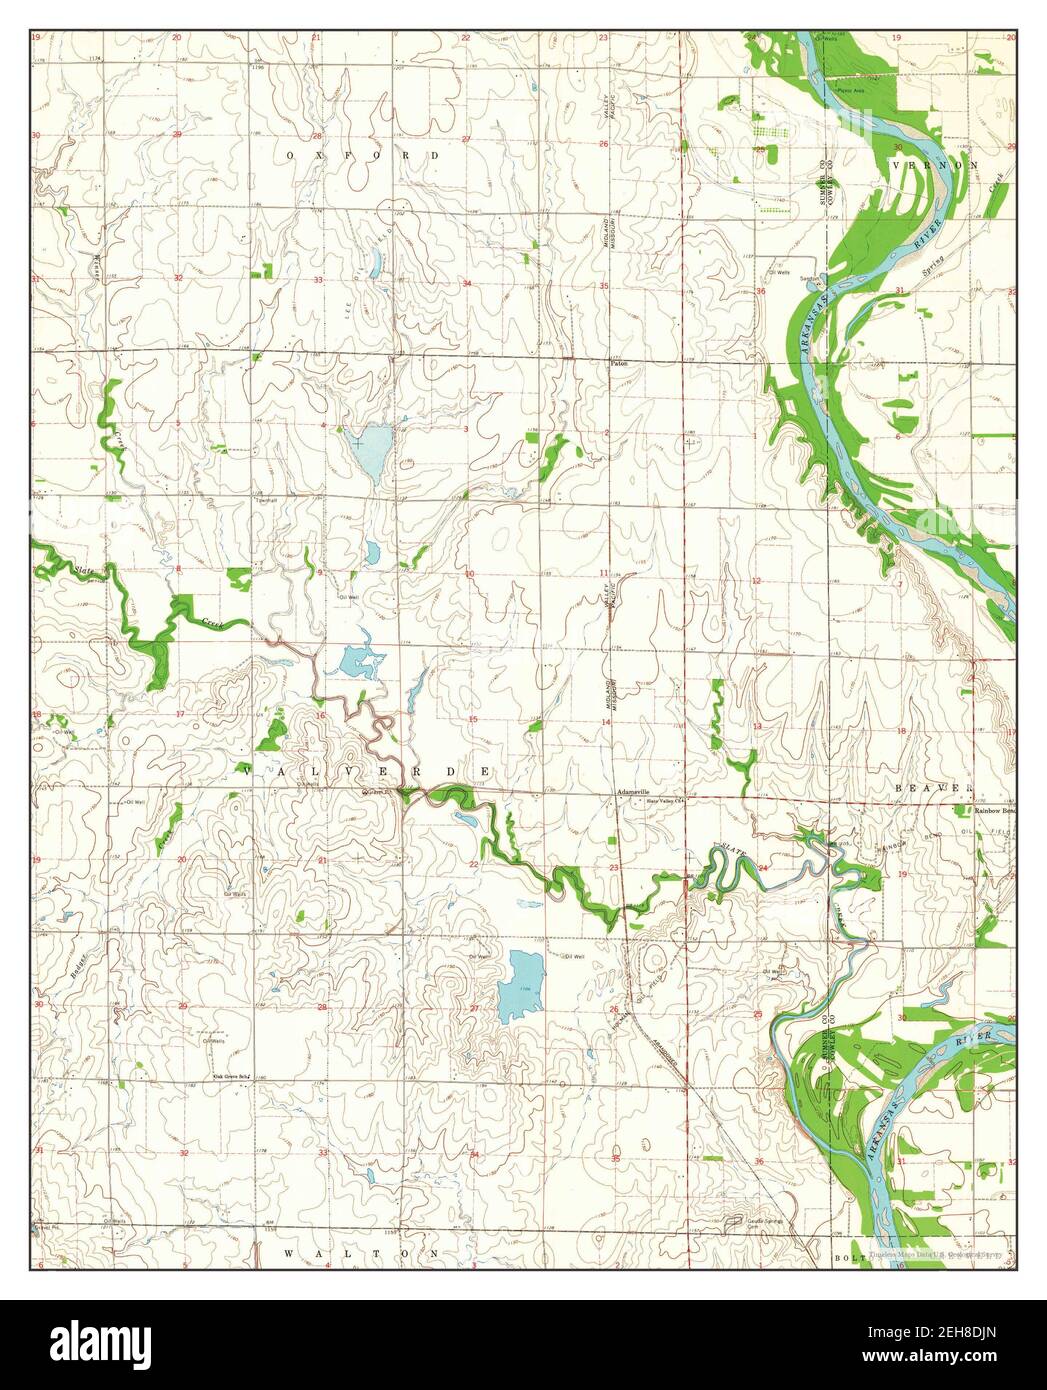 Adamsville, Kansas, map 1965, 1:24000, United States of America by Timeless Maps, data U.S. Geological Survey Stock Photo